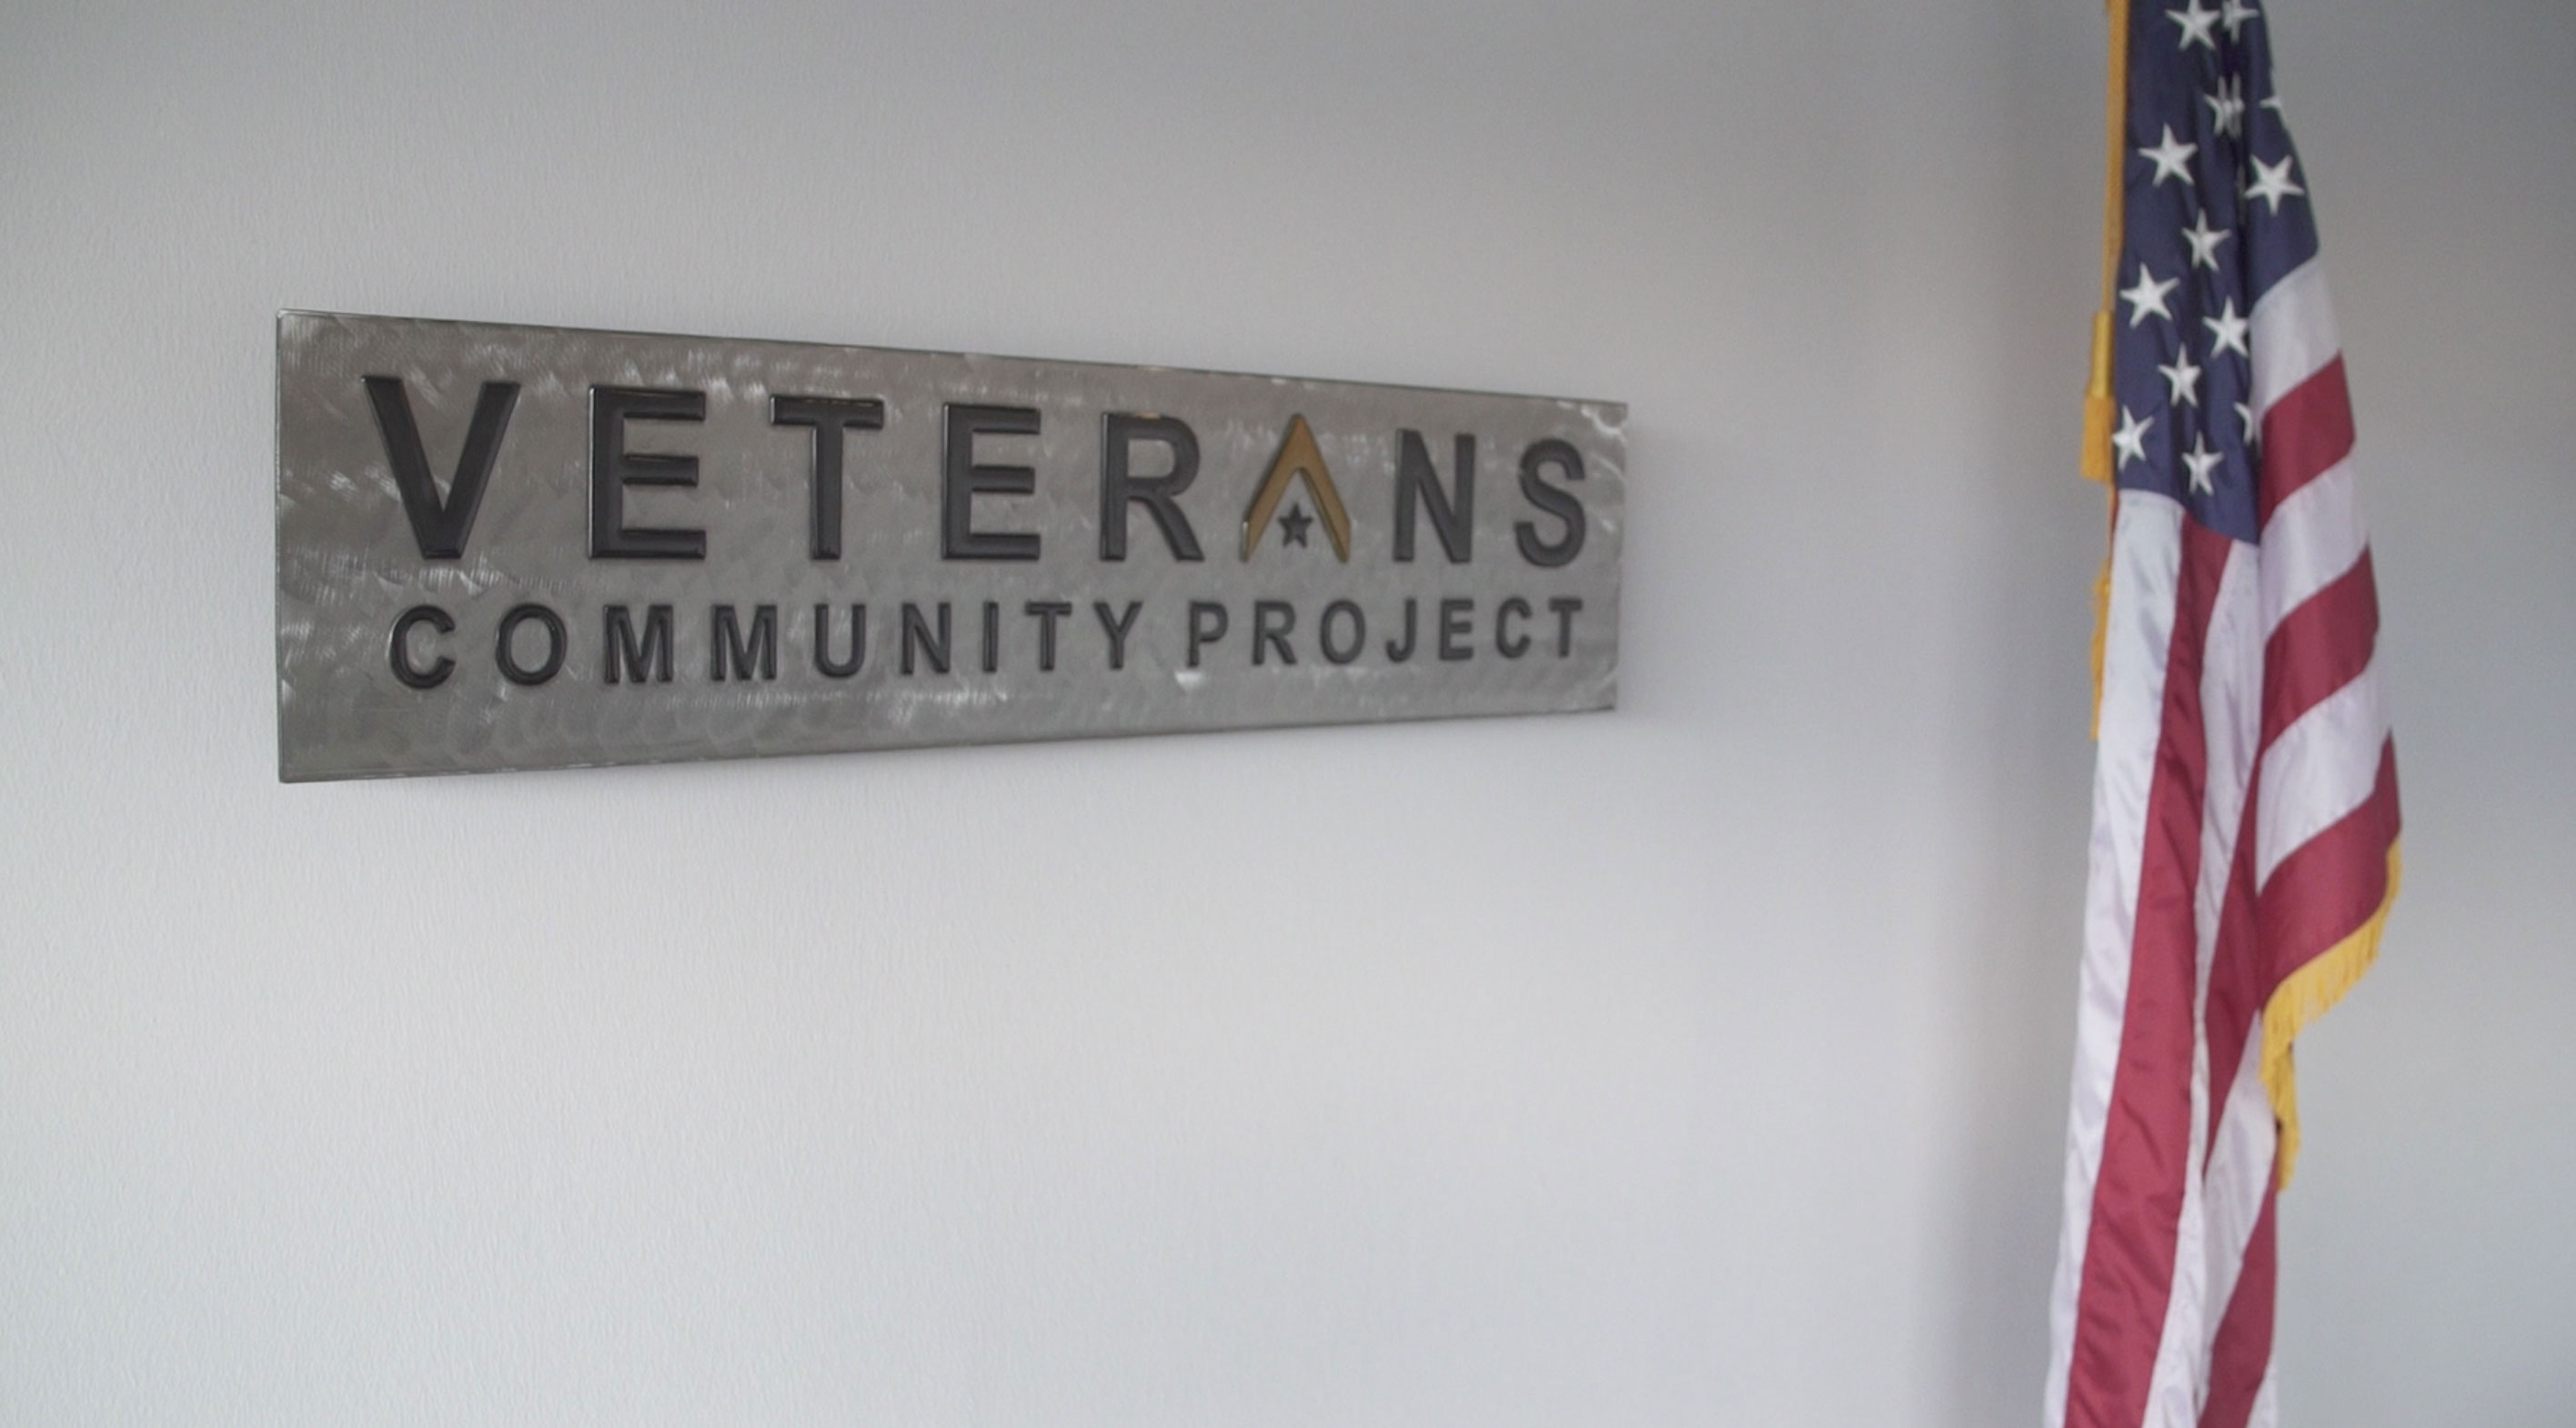 Veterans Community Project